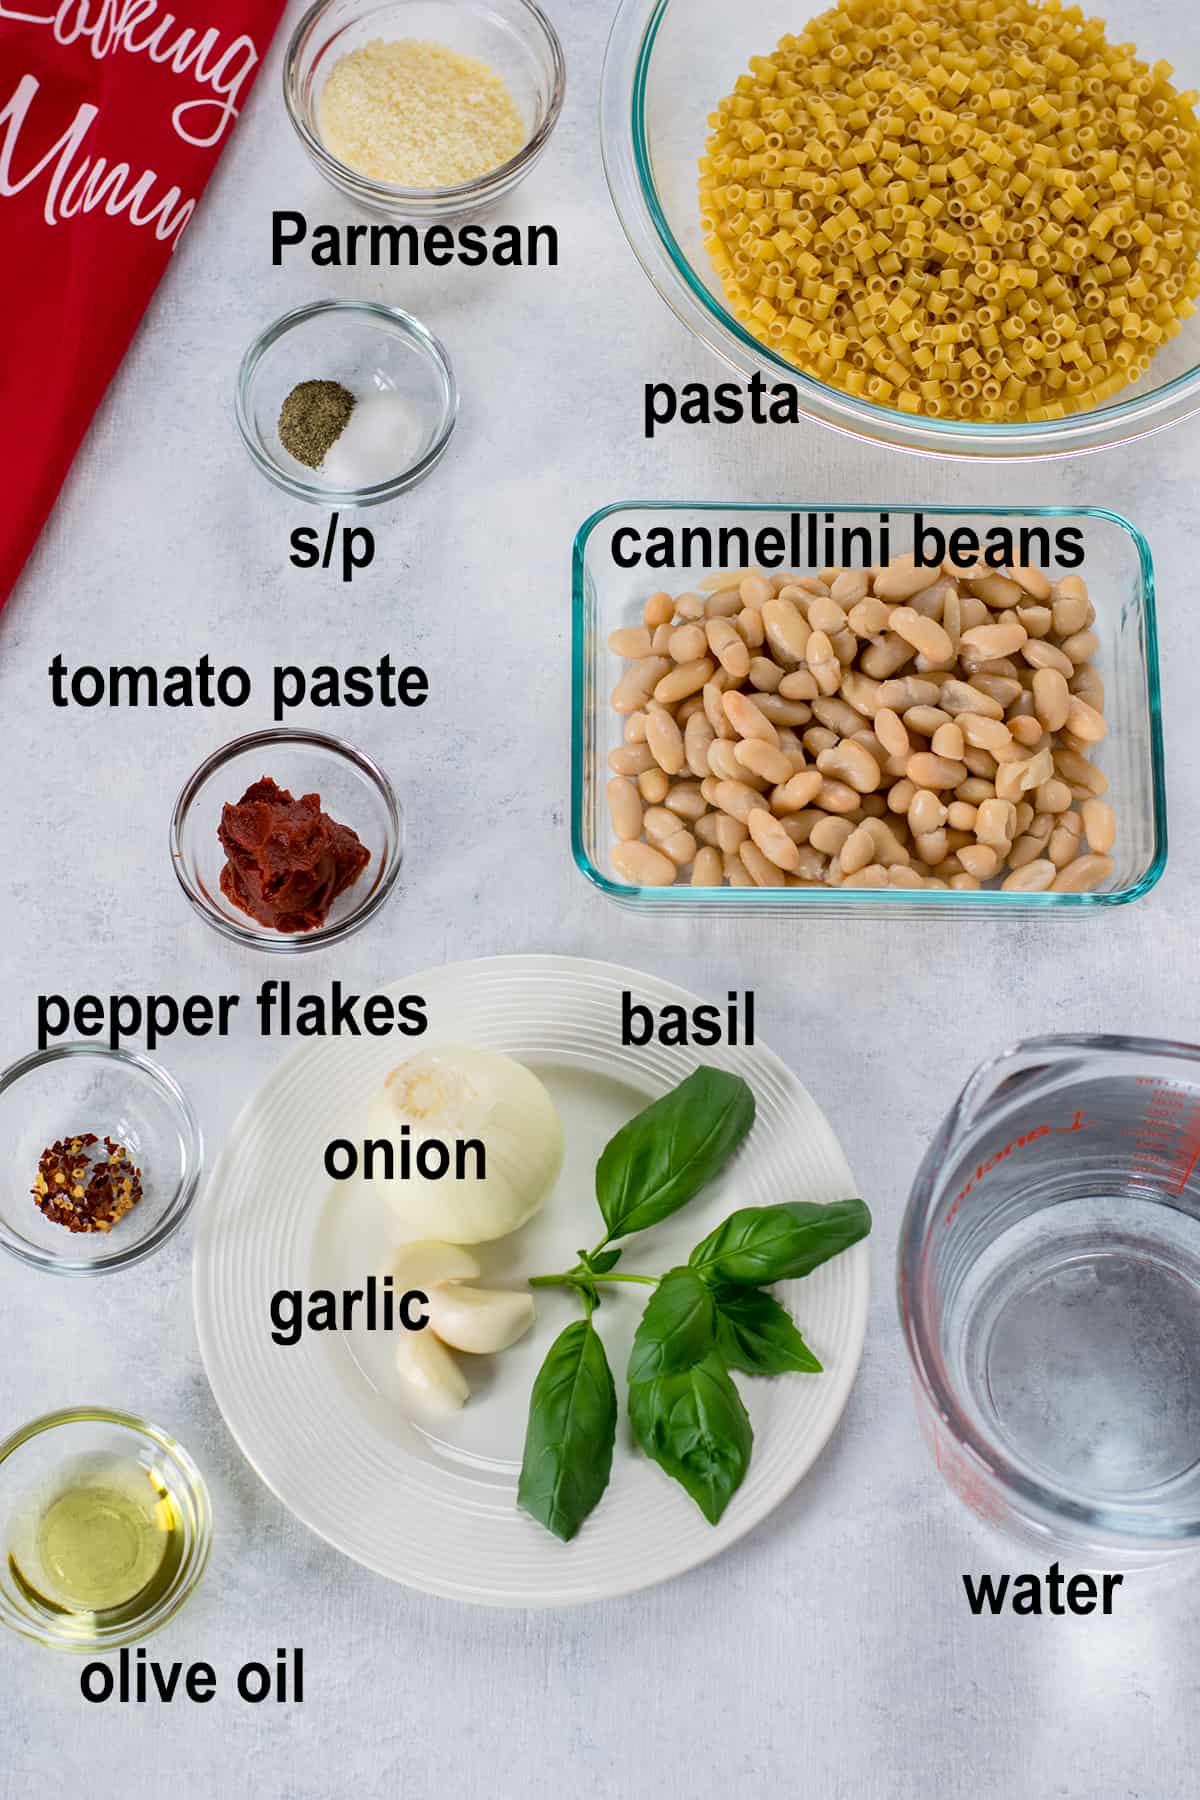 pasta, beans, onion, garlic, basil, oil, tomato paste, water, Parmesan